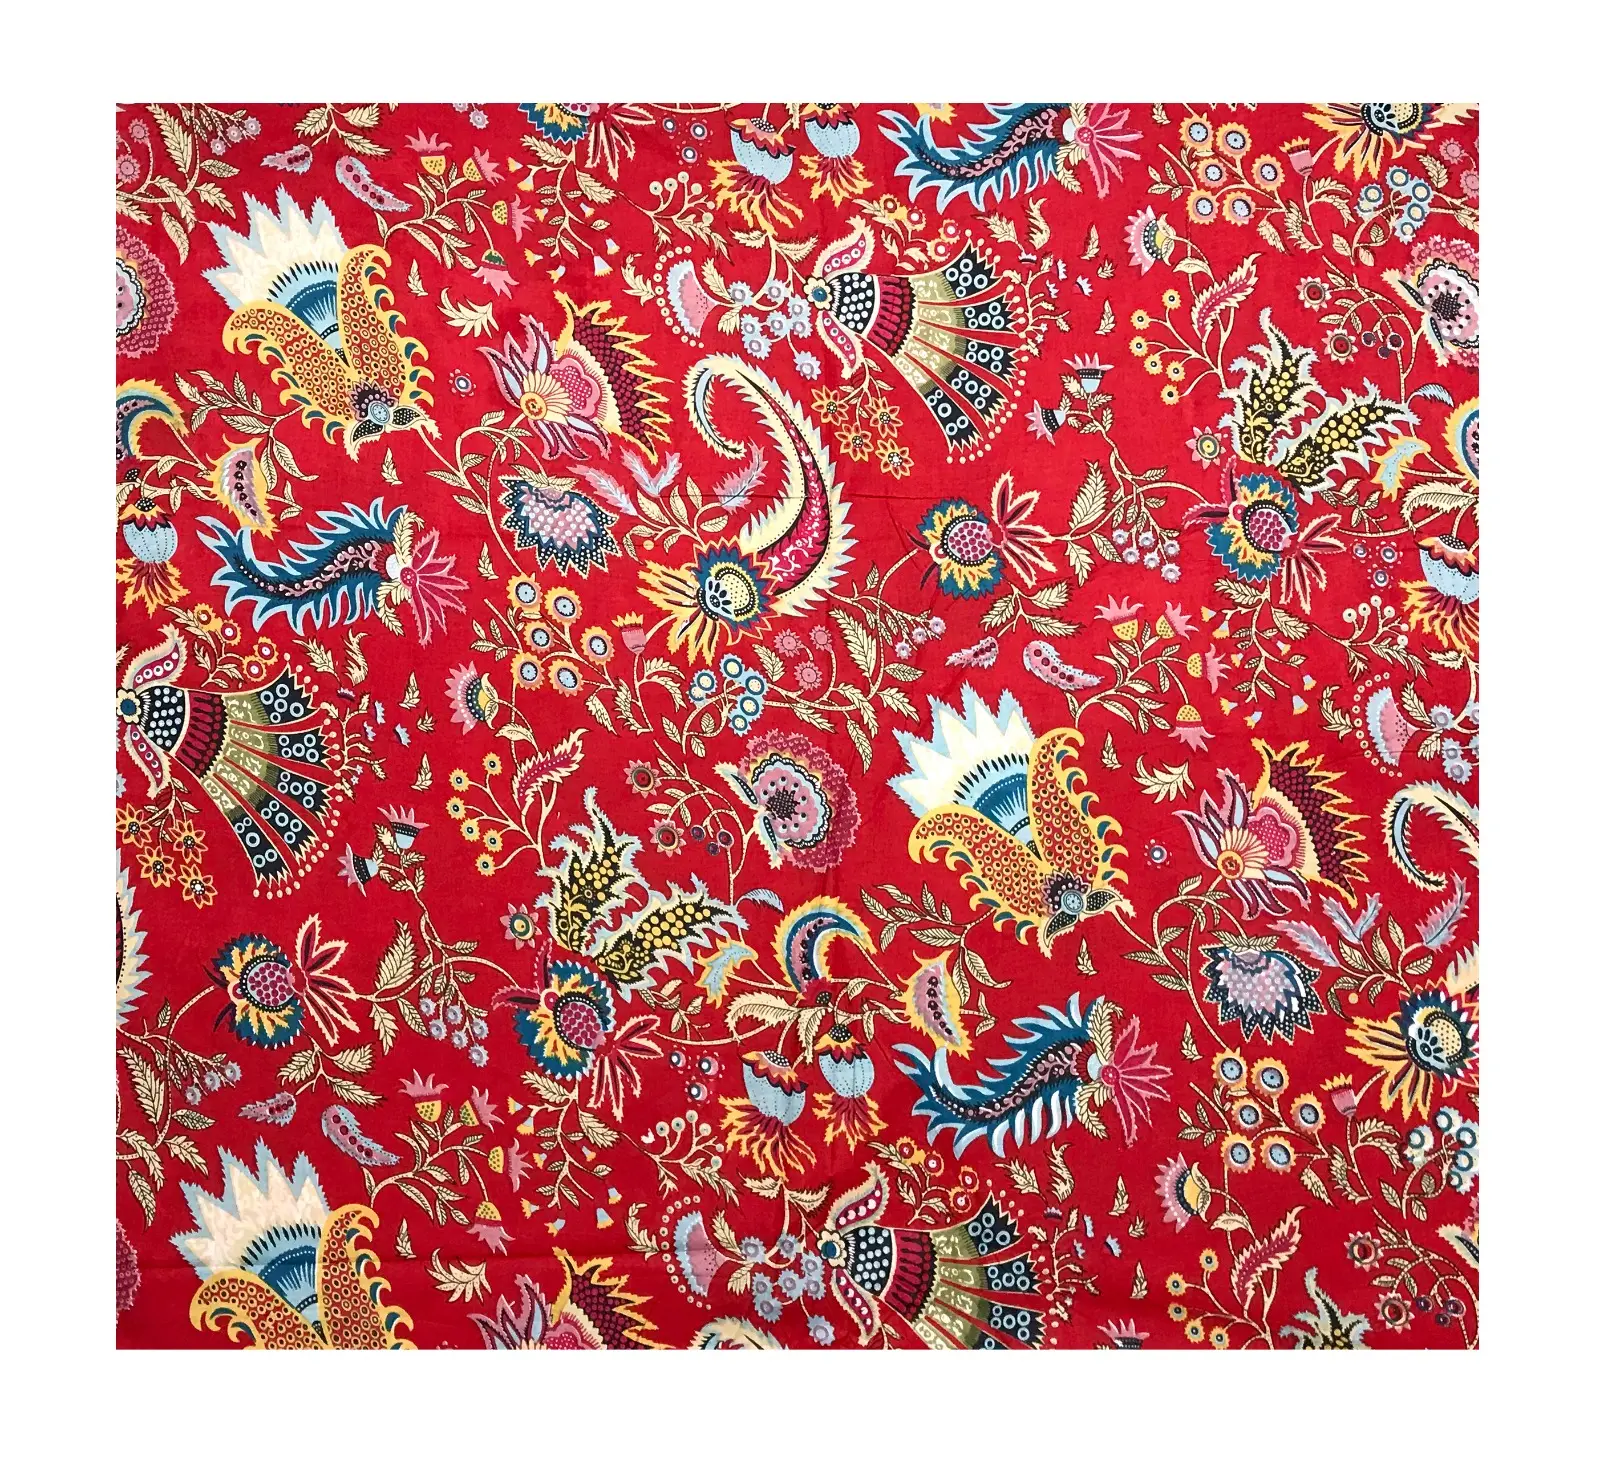 Export Quality Soft Fabric 100% Cotton For Dress Making Running Fabric Beautiful Hand Block Sanganeri Print Cotton Textile OEM